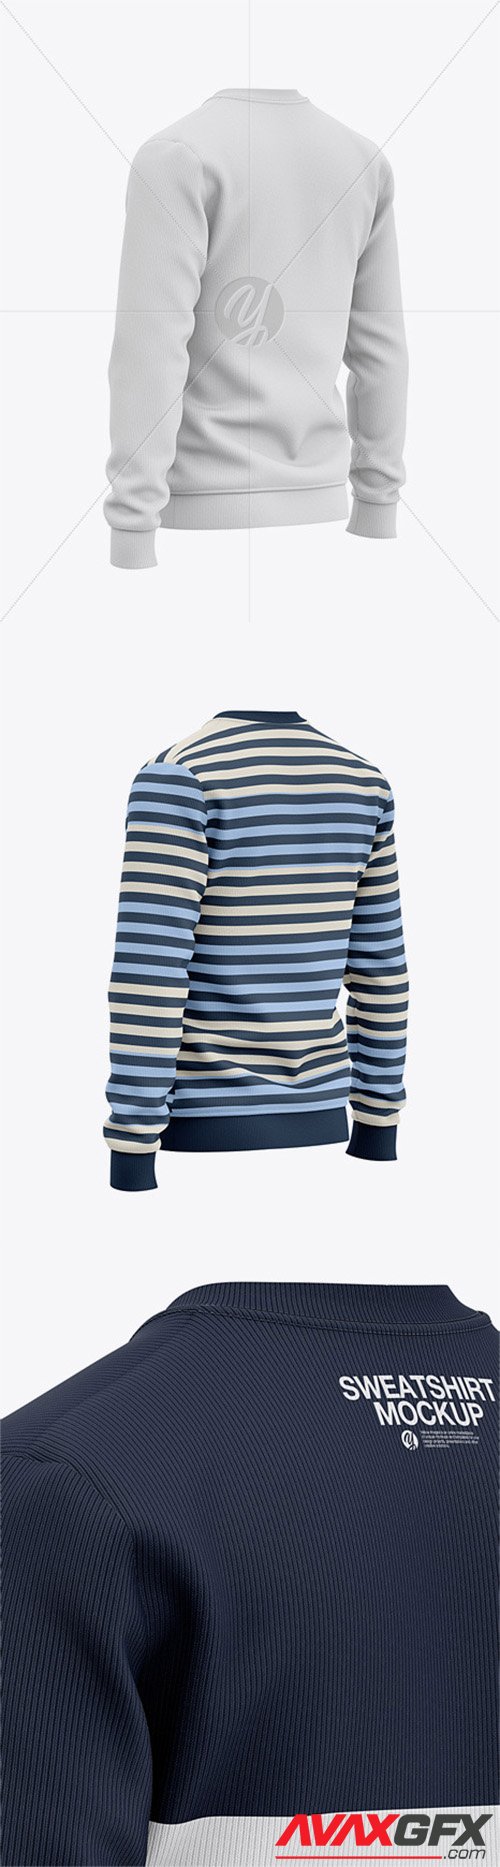 Men's Sweatshirt Mockup - Back Half Side View Of Sweater 55974